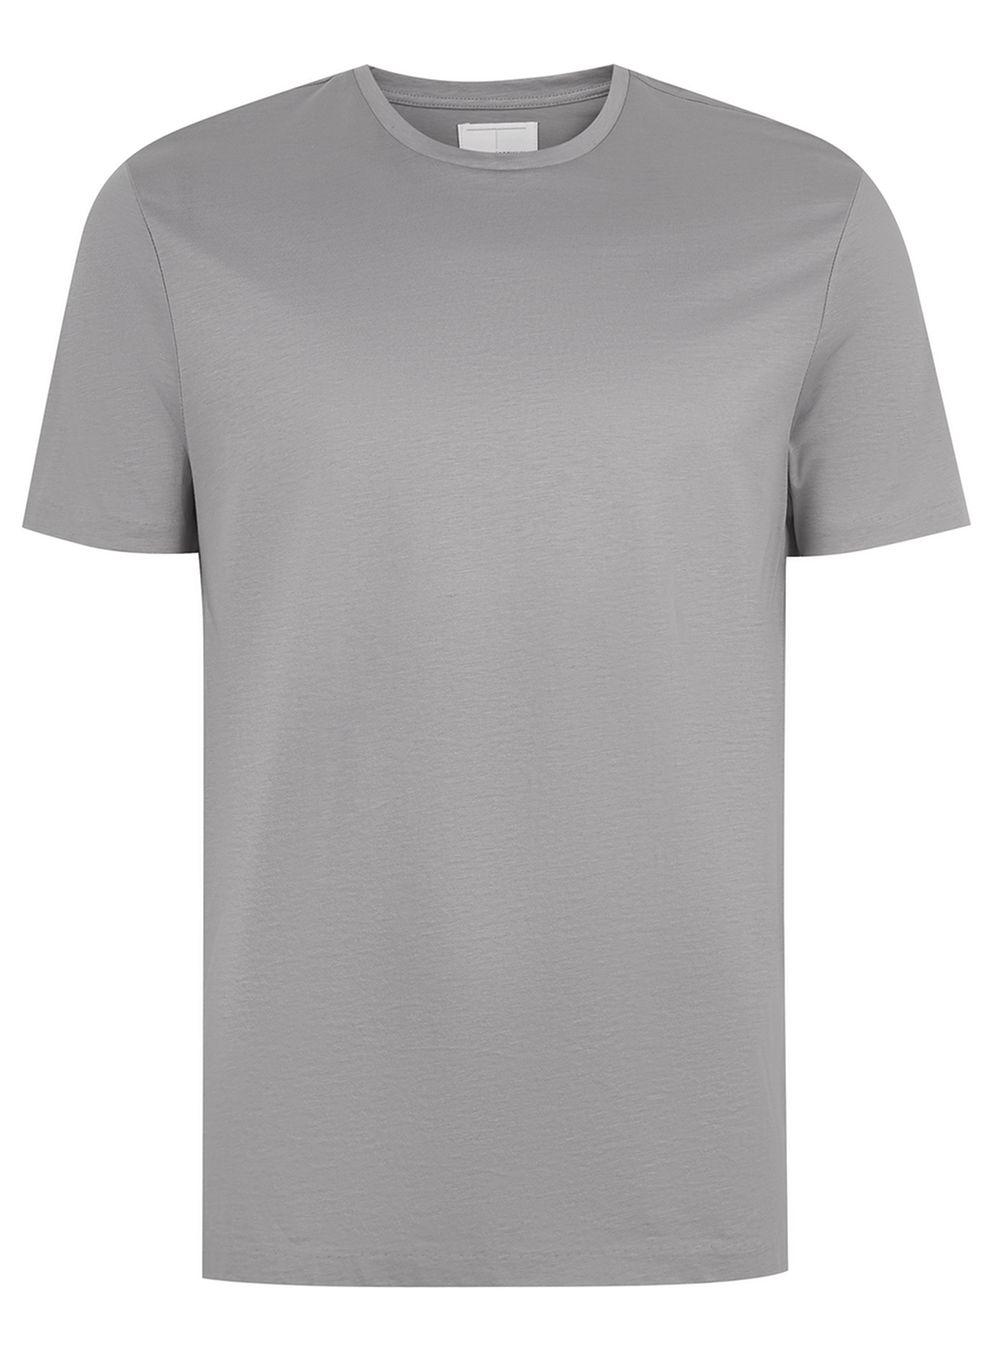 Lyst - Topman Silver Premium T-shirt in Gray for Men